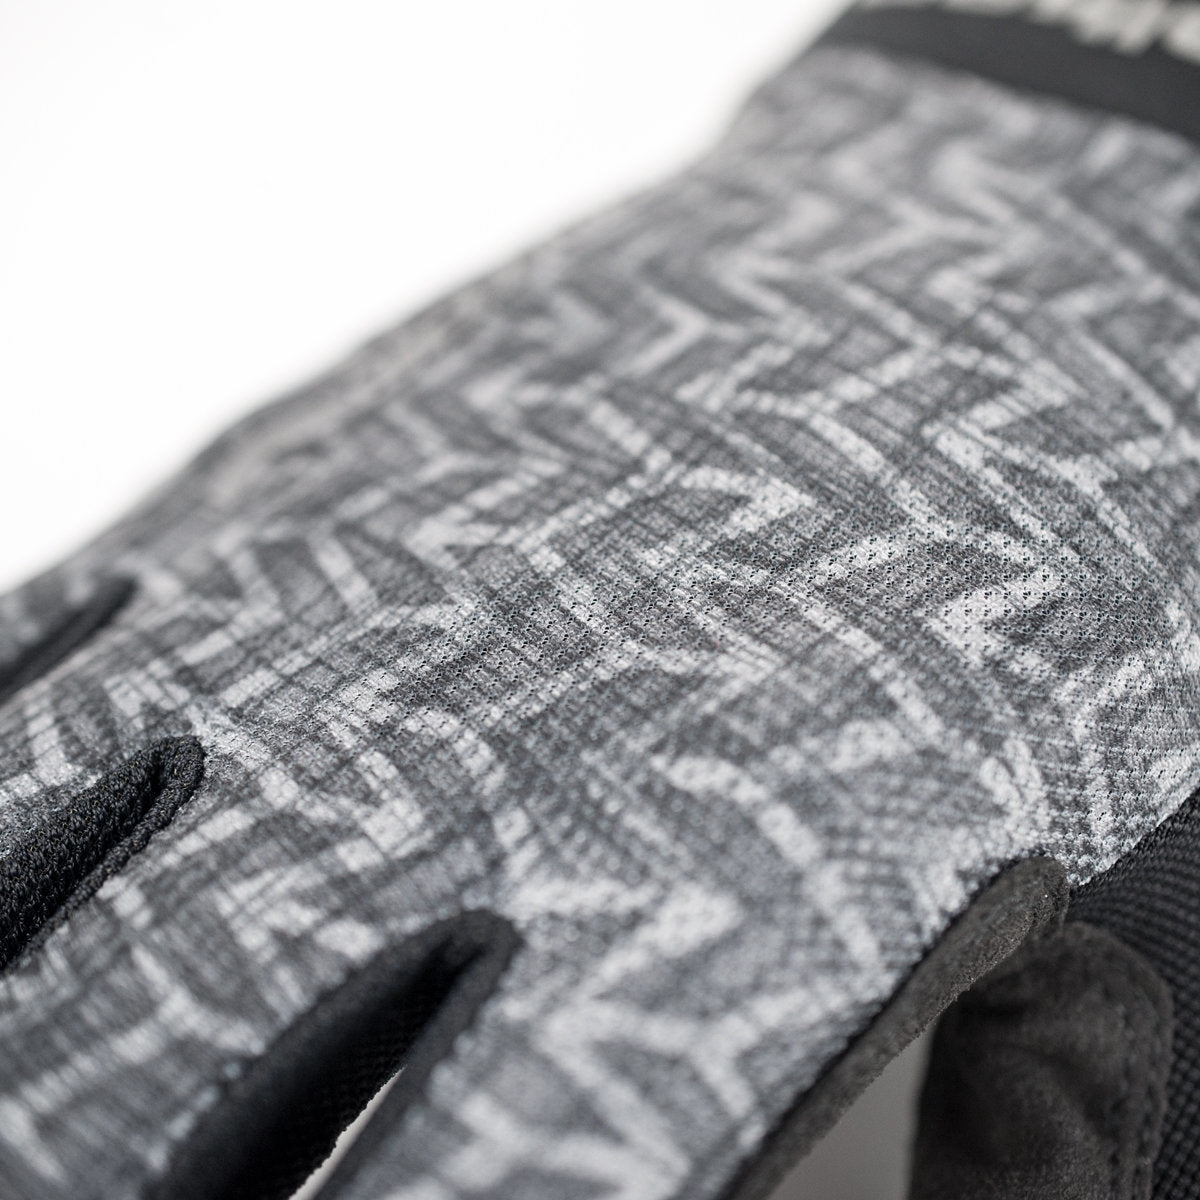 Valken Phantom Agility Gloves | Grey/Black | Shop Gloves